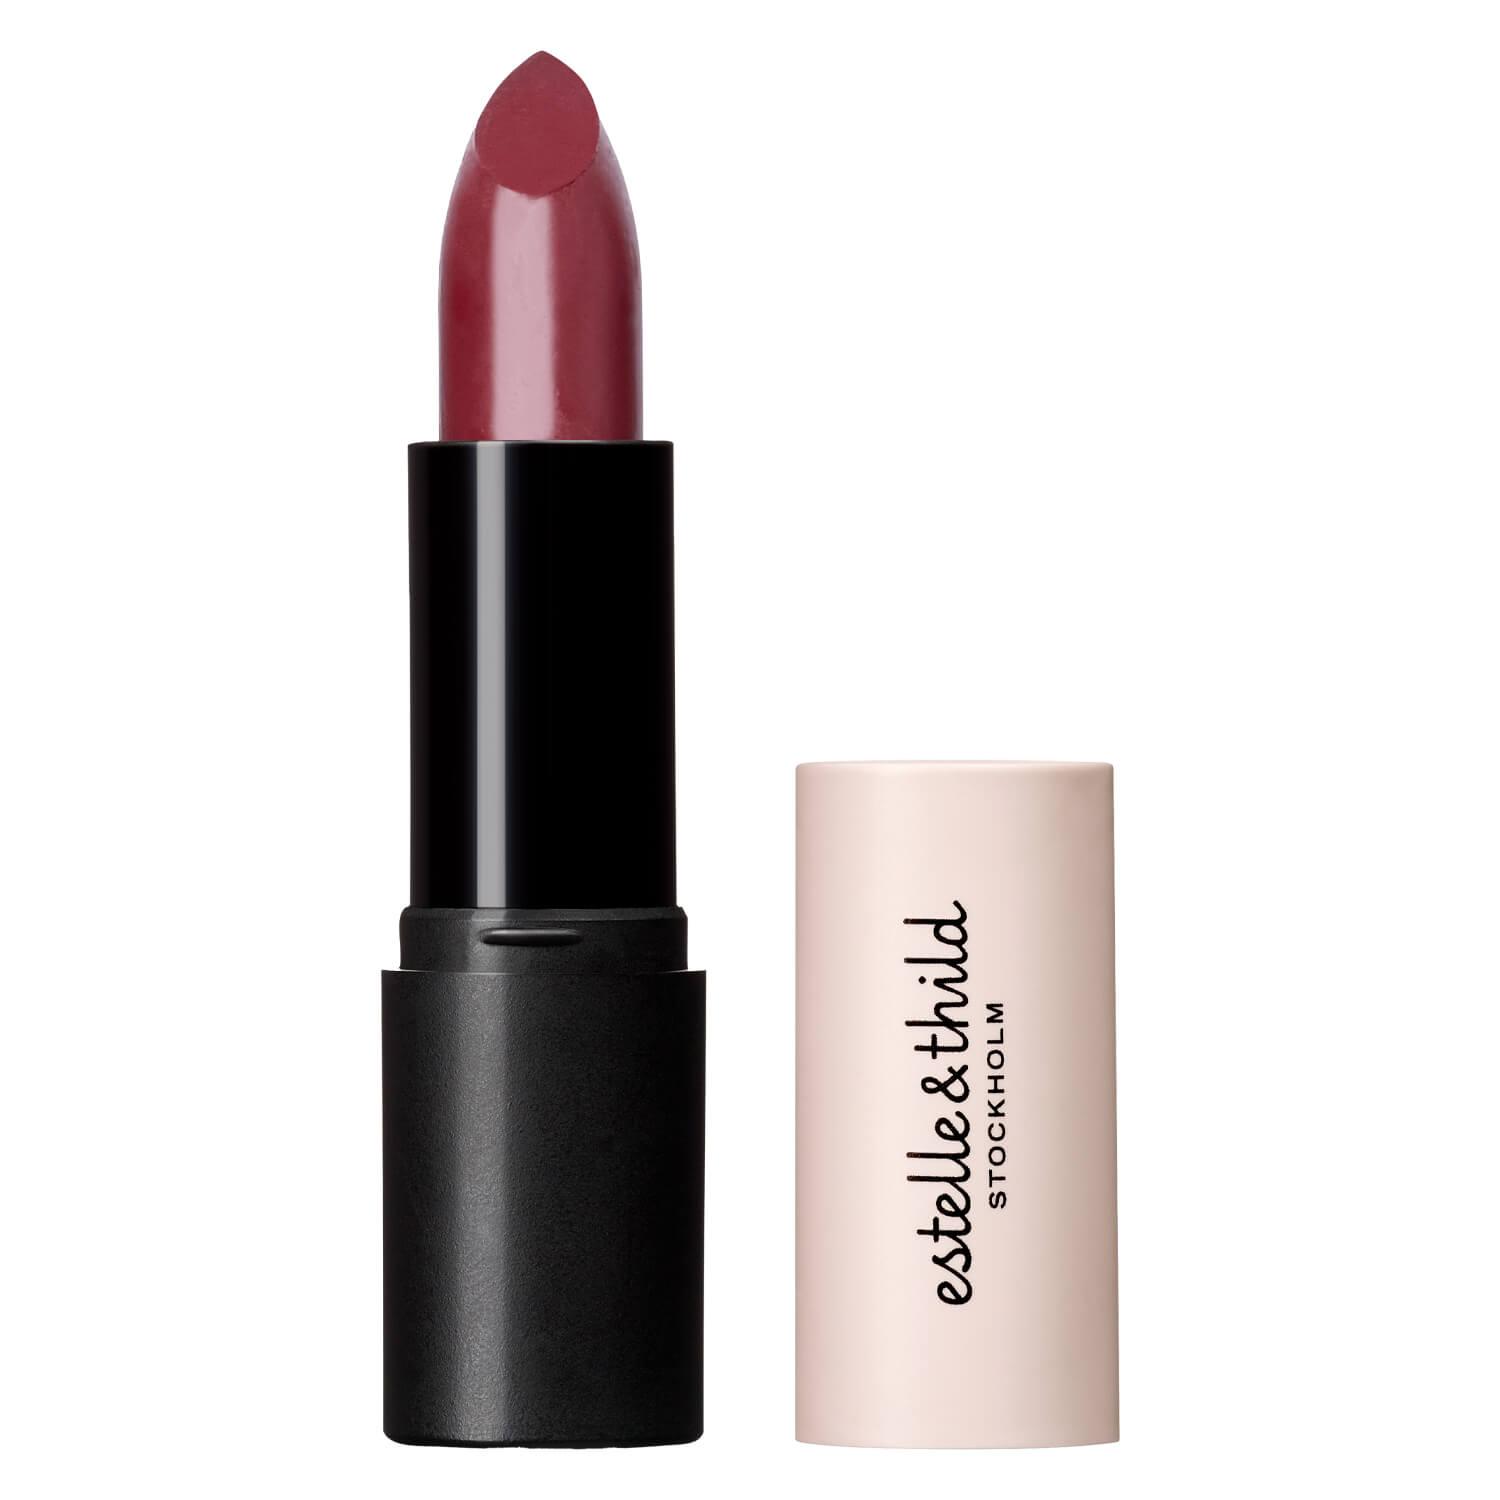 Estelle&Thild Make-Up - Cream Lipstick Rosewood